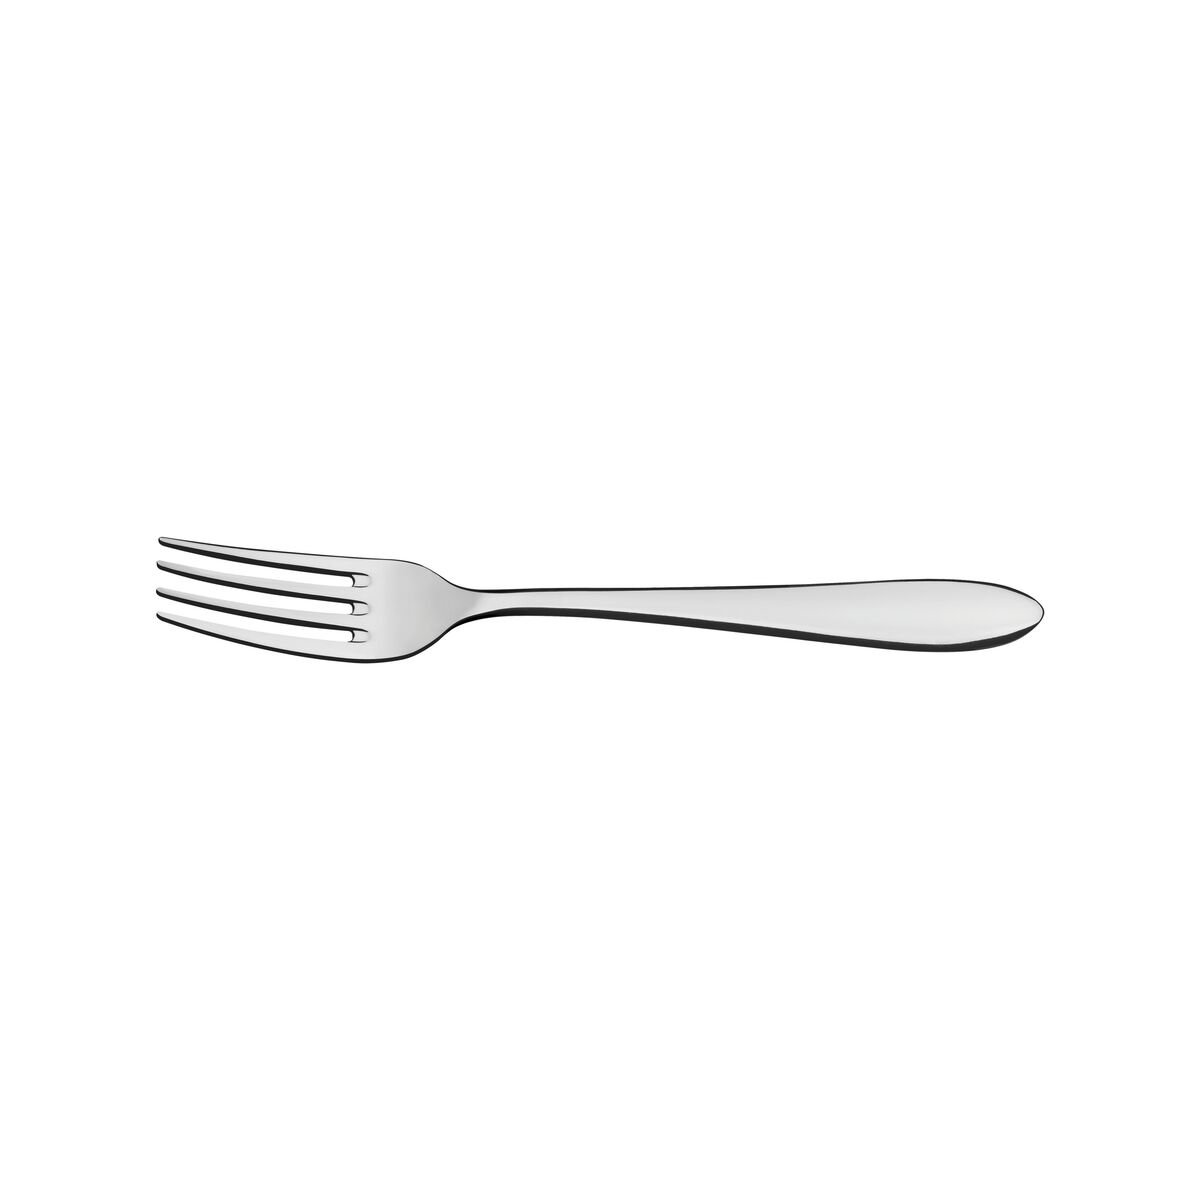 Tramontina Satri stainless steel dinner fork